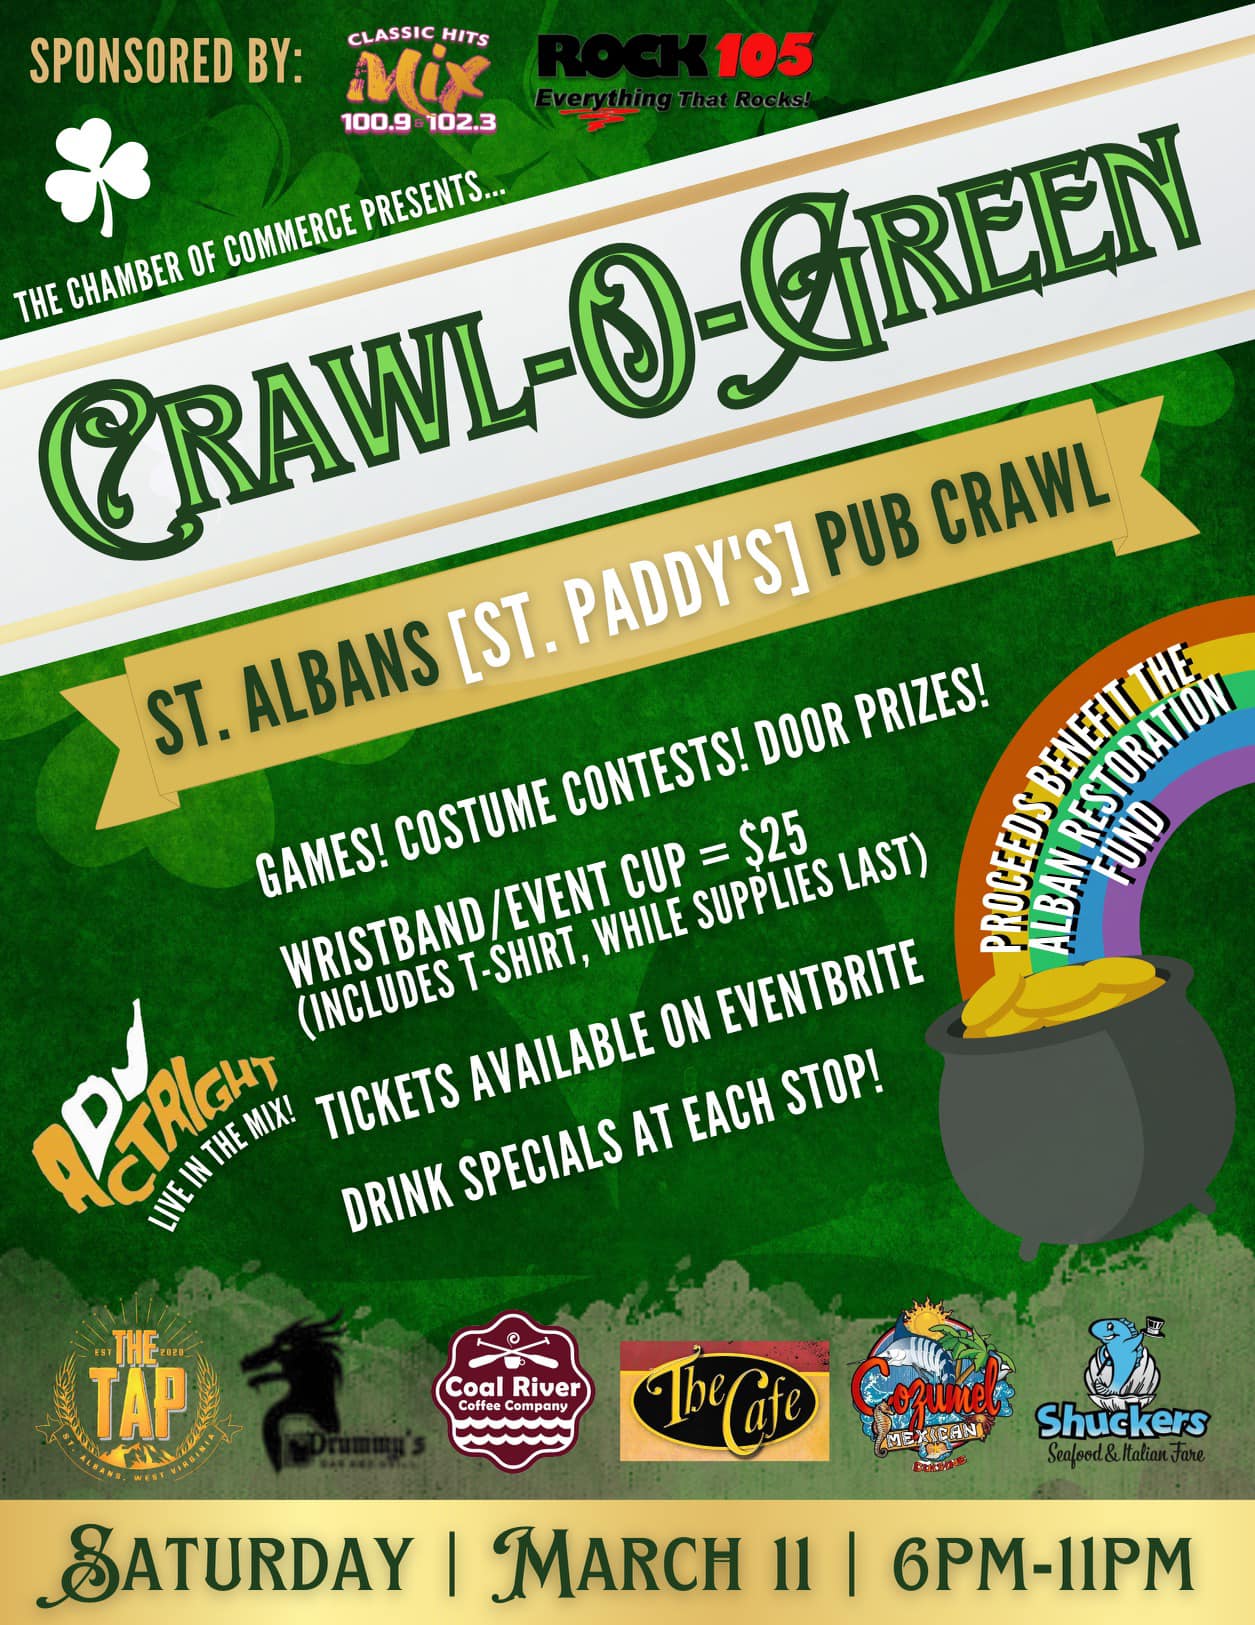 Crawl o Green - St. Albans Pub Crawl St. Patrick's Day